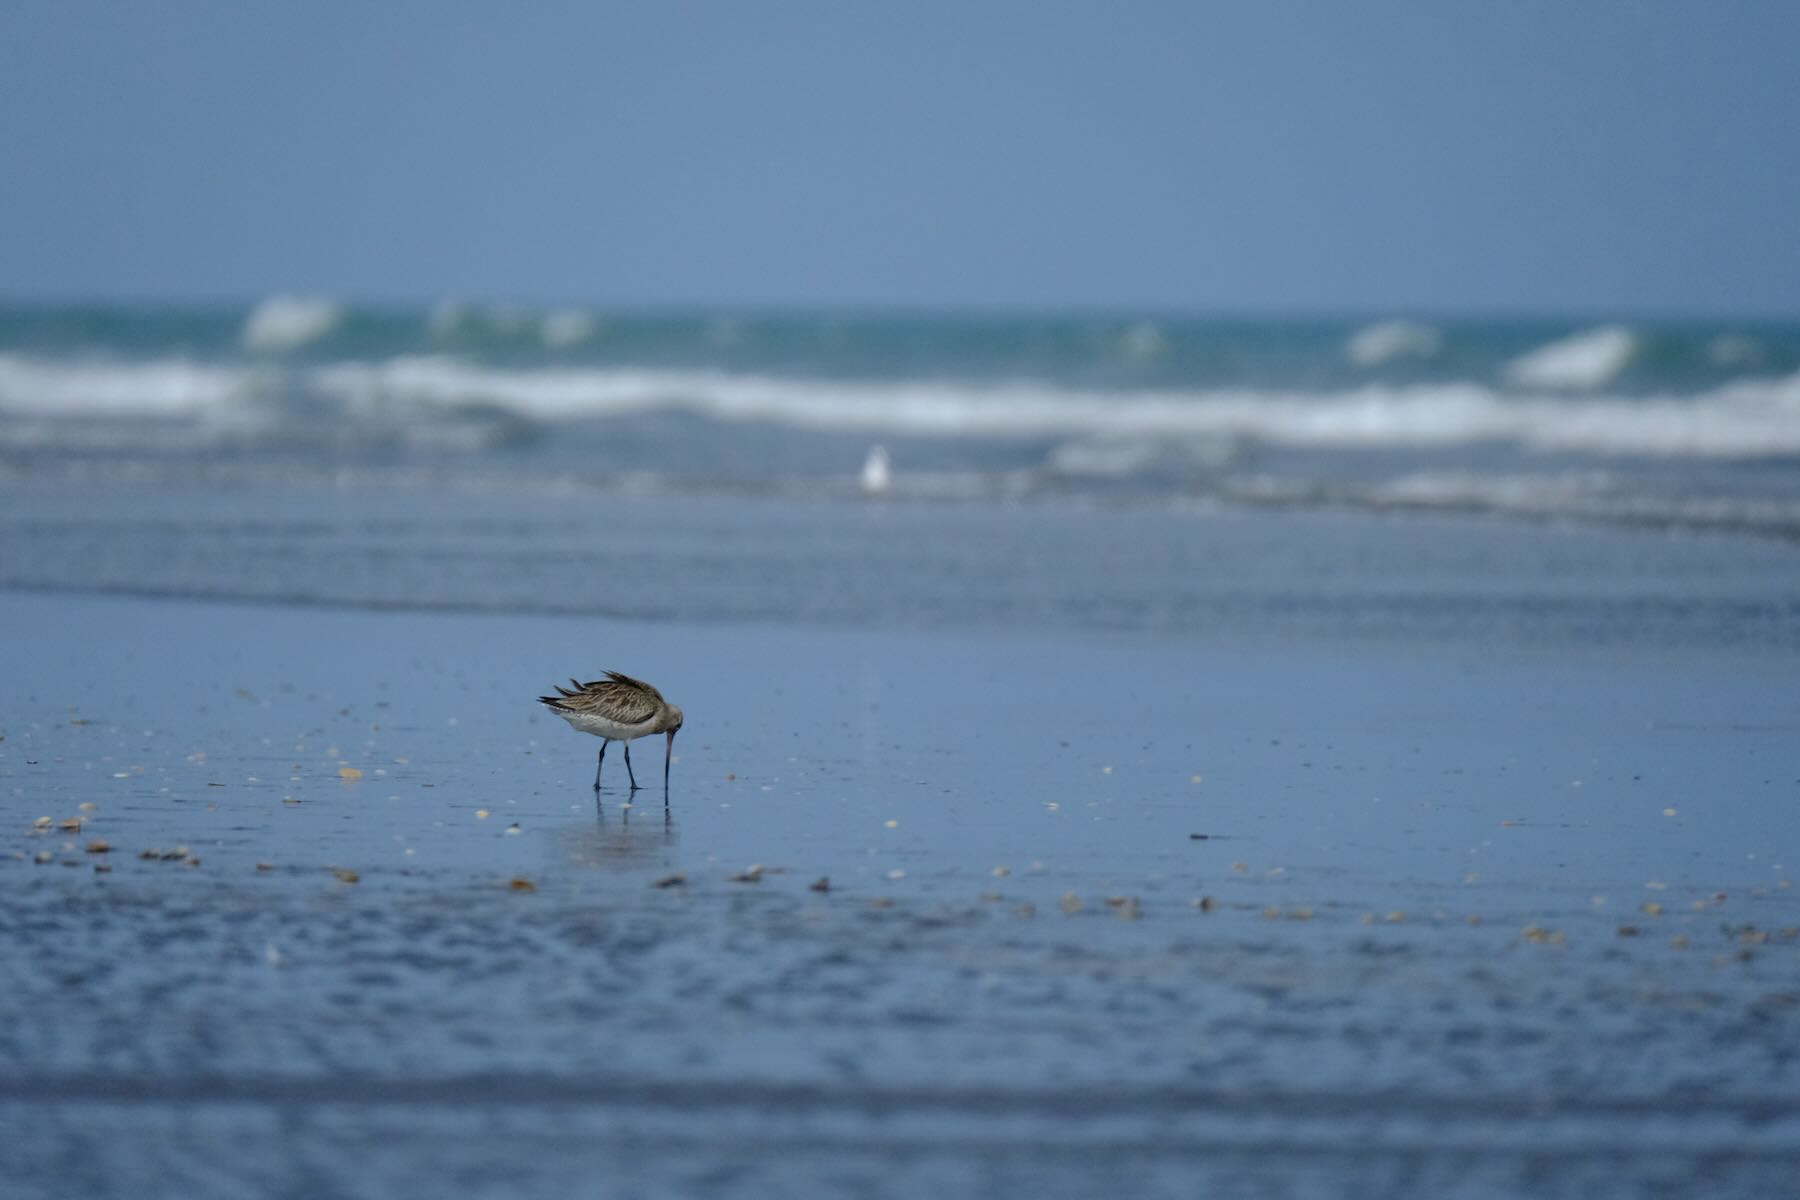 Bird with long beak feeding in wet sand. 